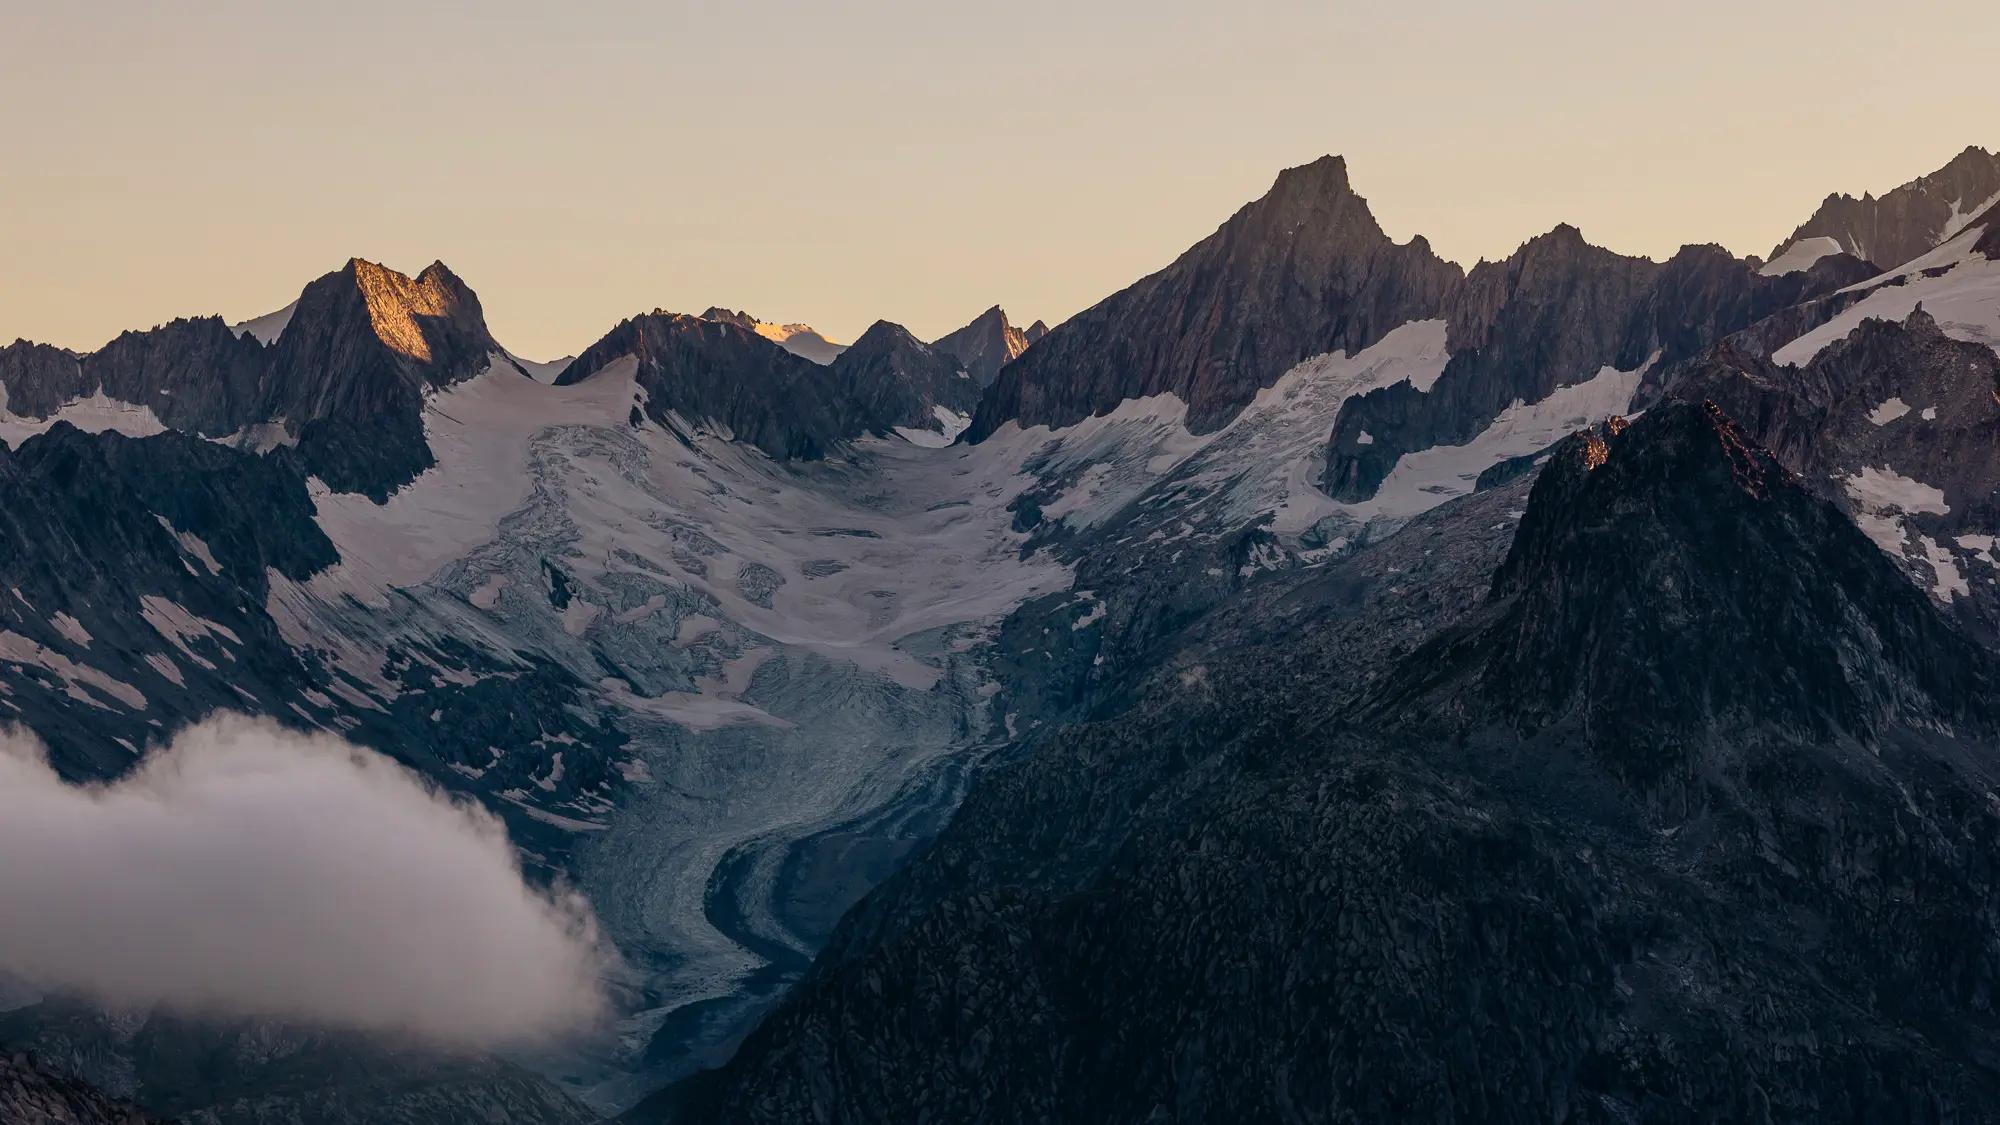 The impressive glacier world of the Swiss Alps